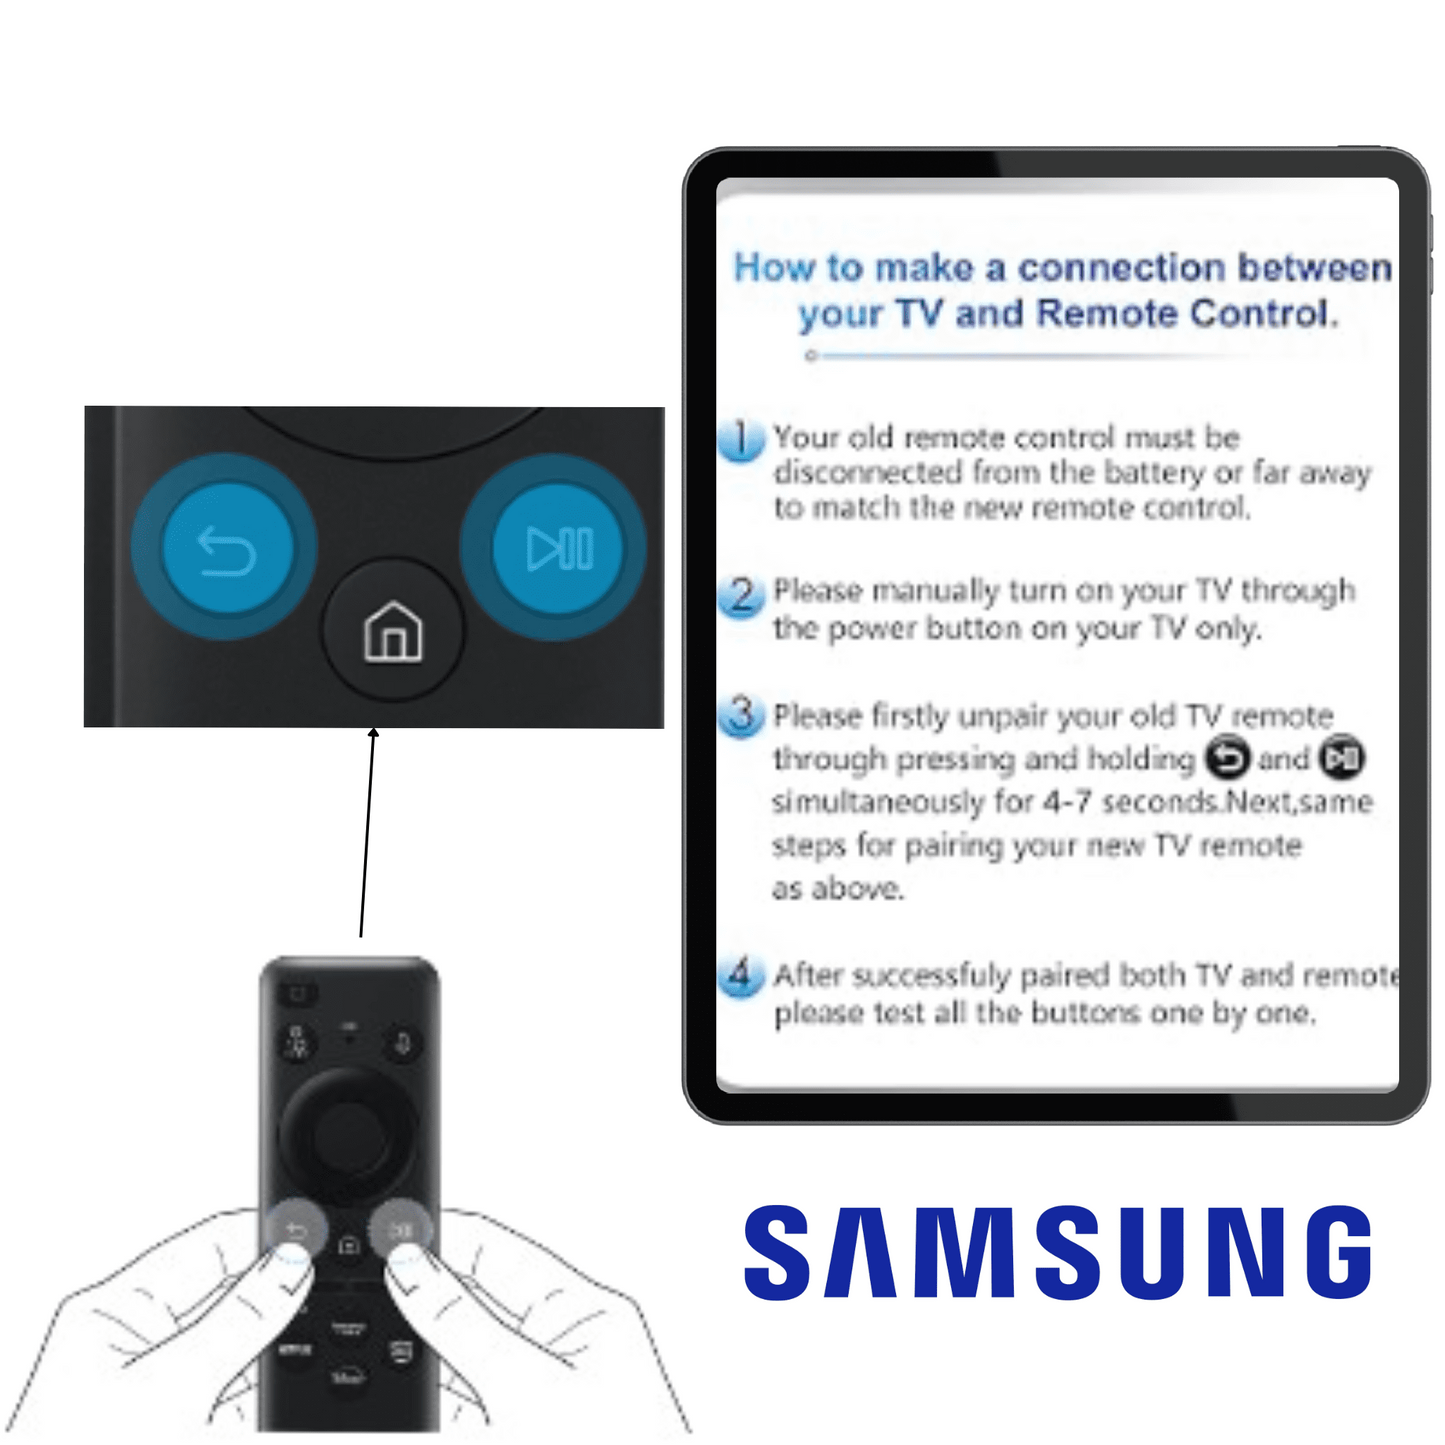 Refurbished Genuine Original Samsung Solar Power Smart Tv Remote with voice